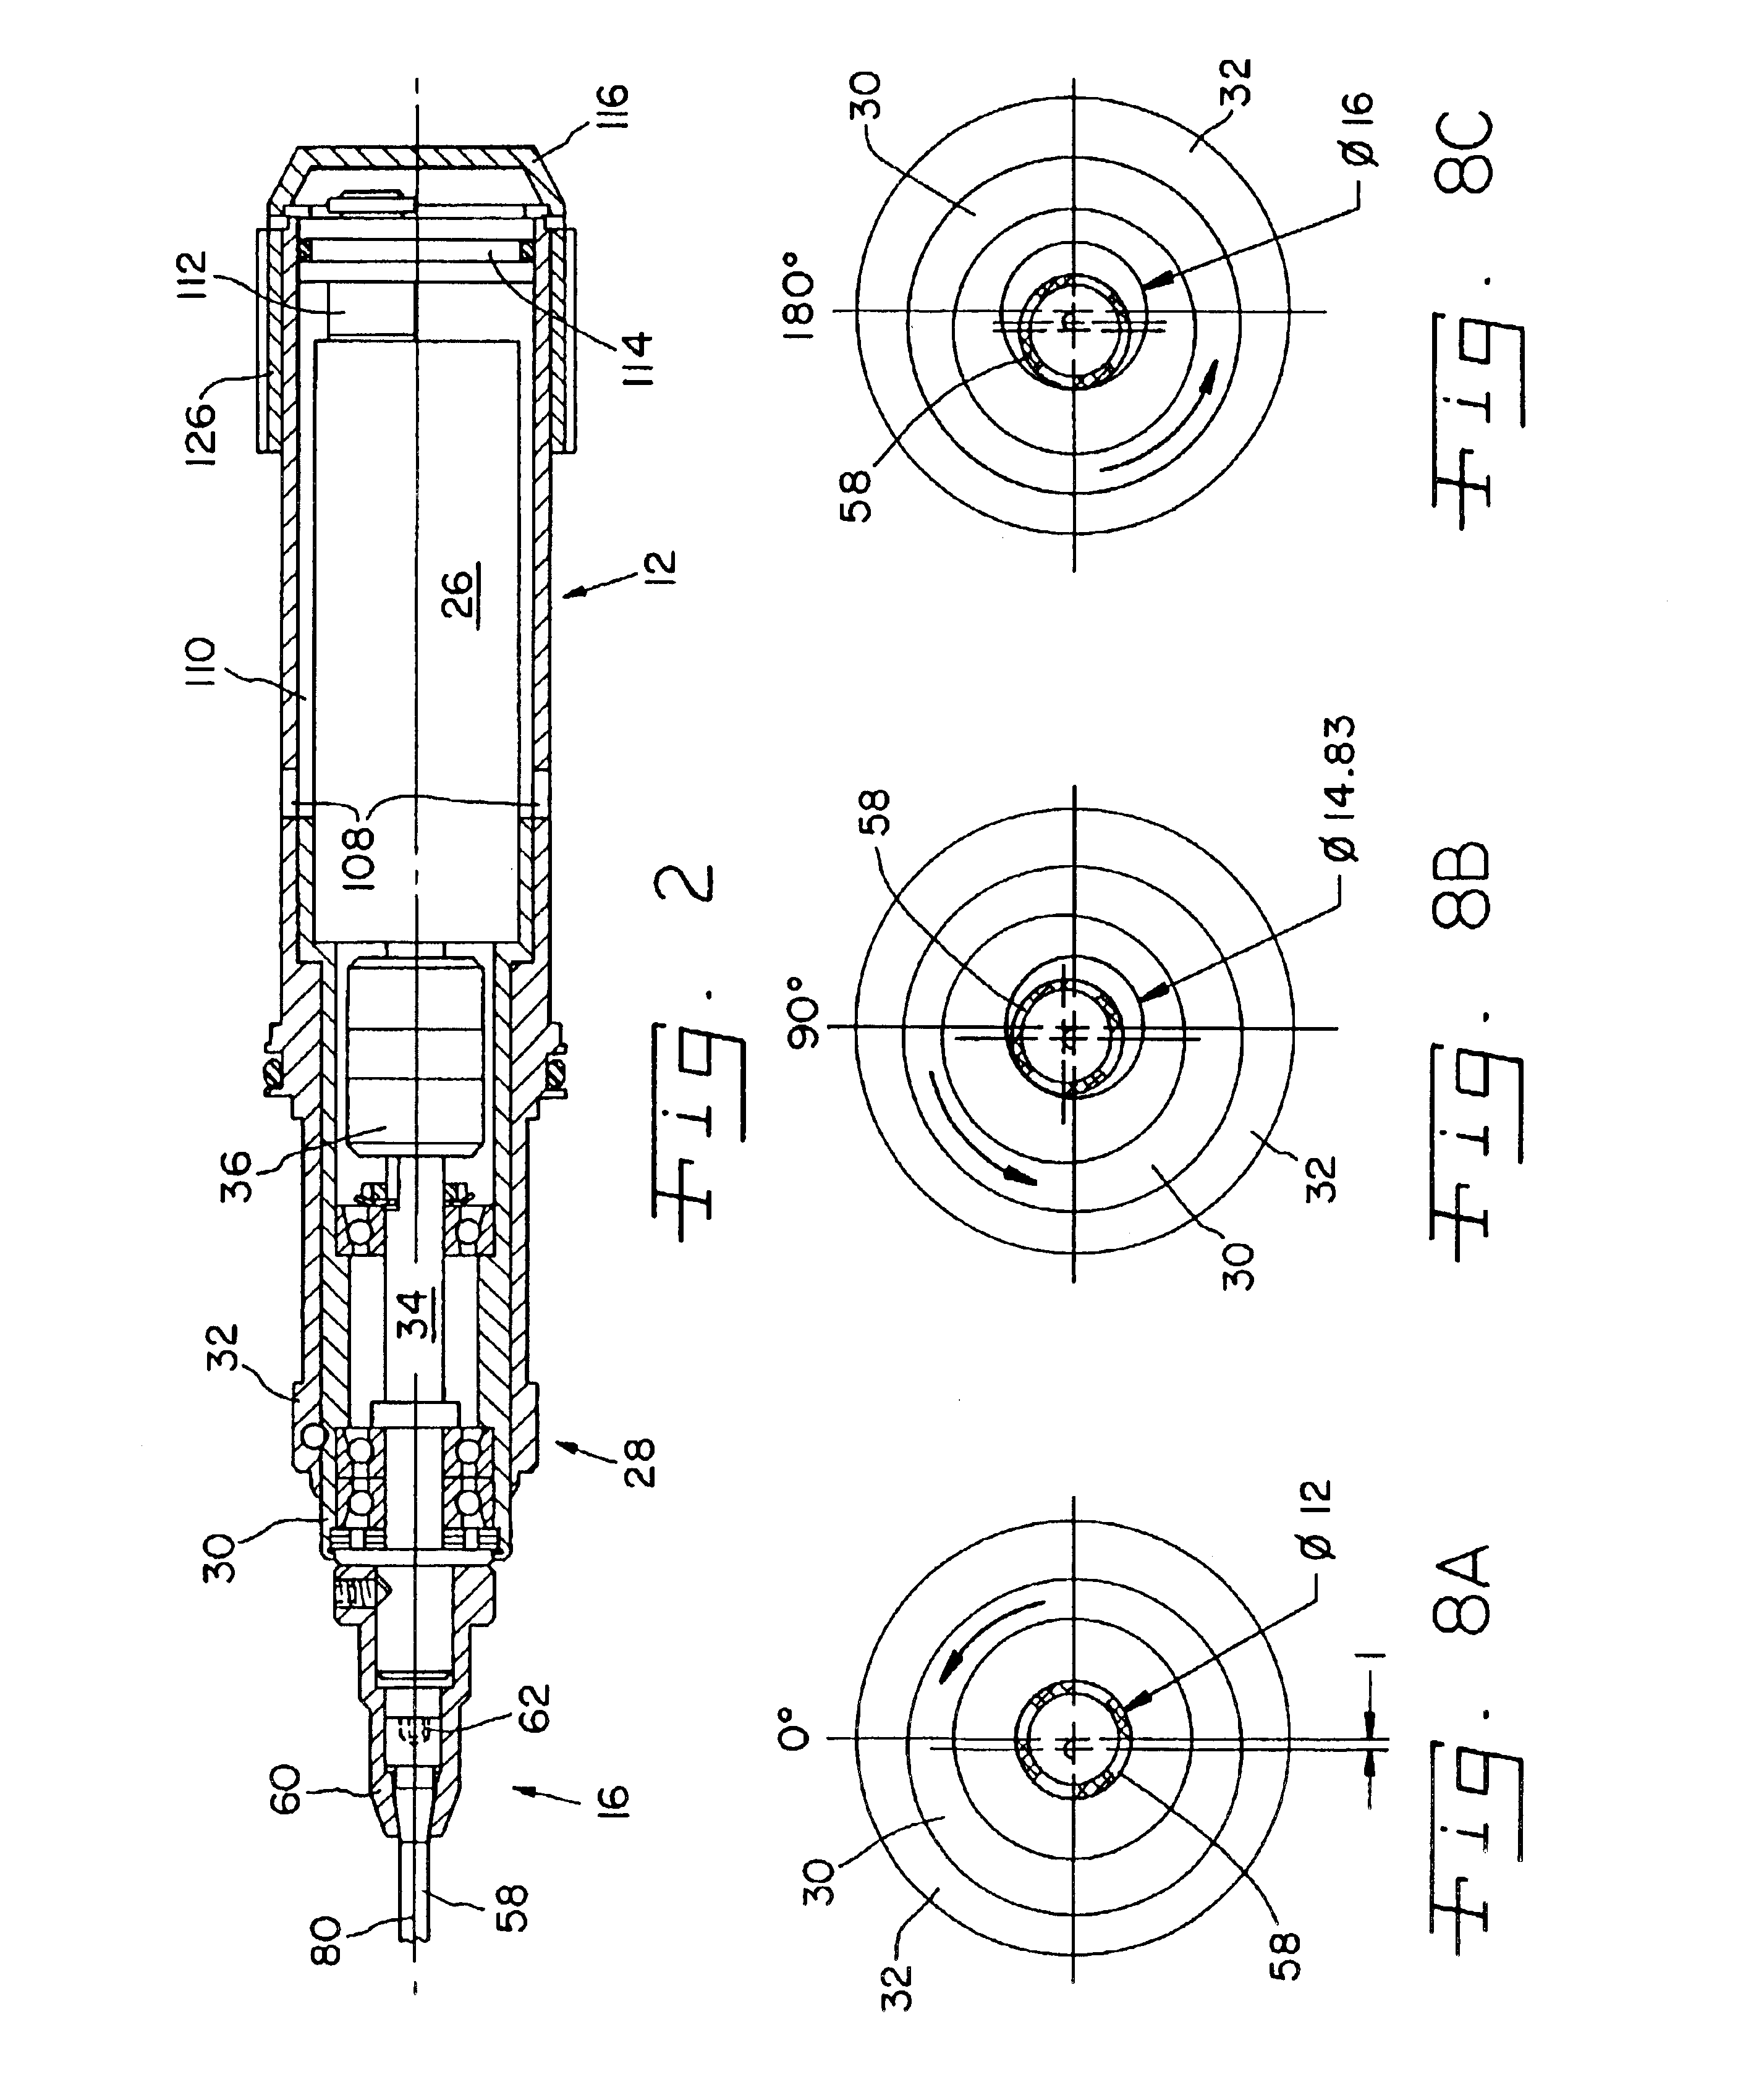 Hand tool apparatus for orbital drilling